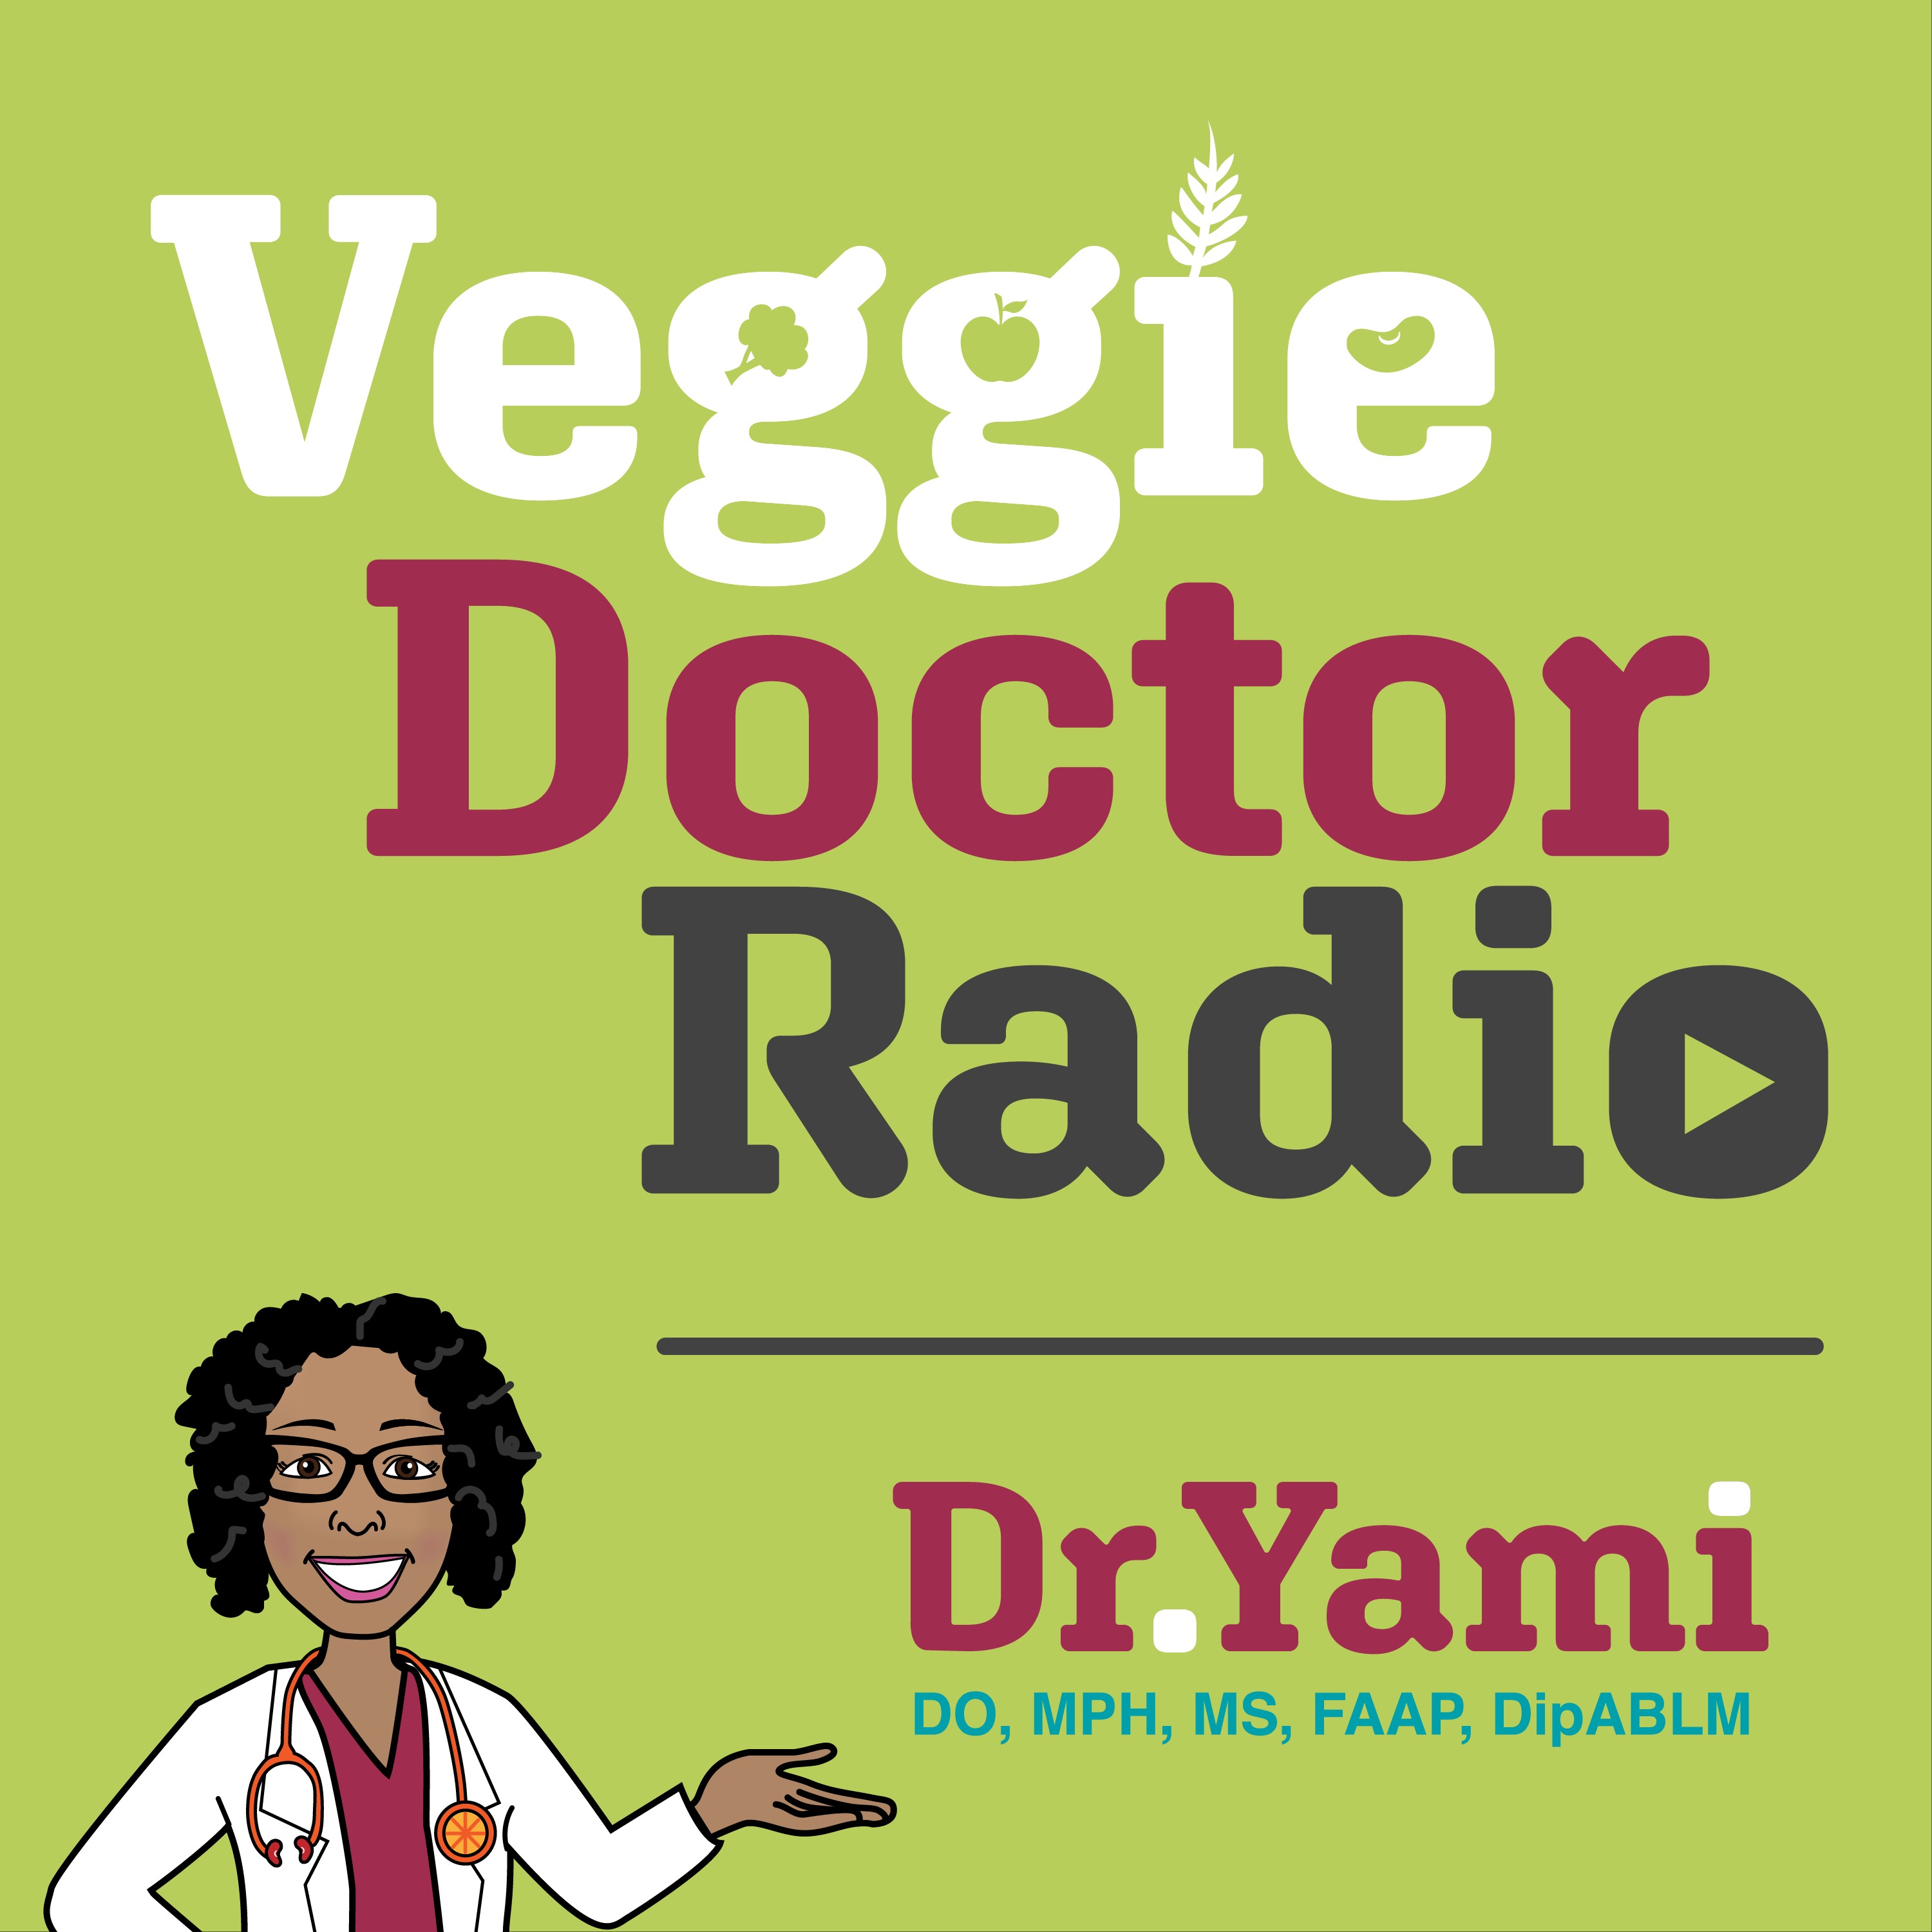 288: Soul Food meets Puerto Rico at Black Rican Vegan with Lyana Blount (Veggie Doctor Radio)